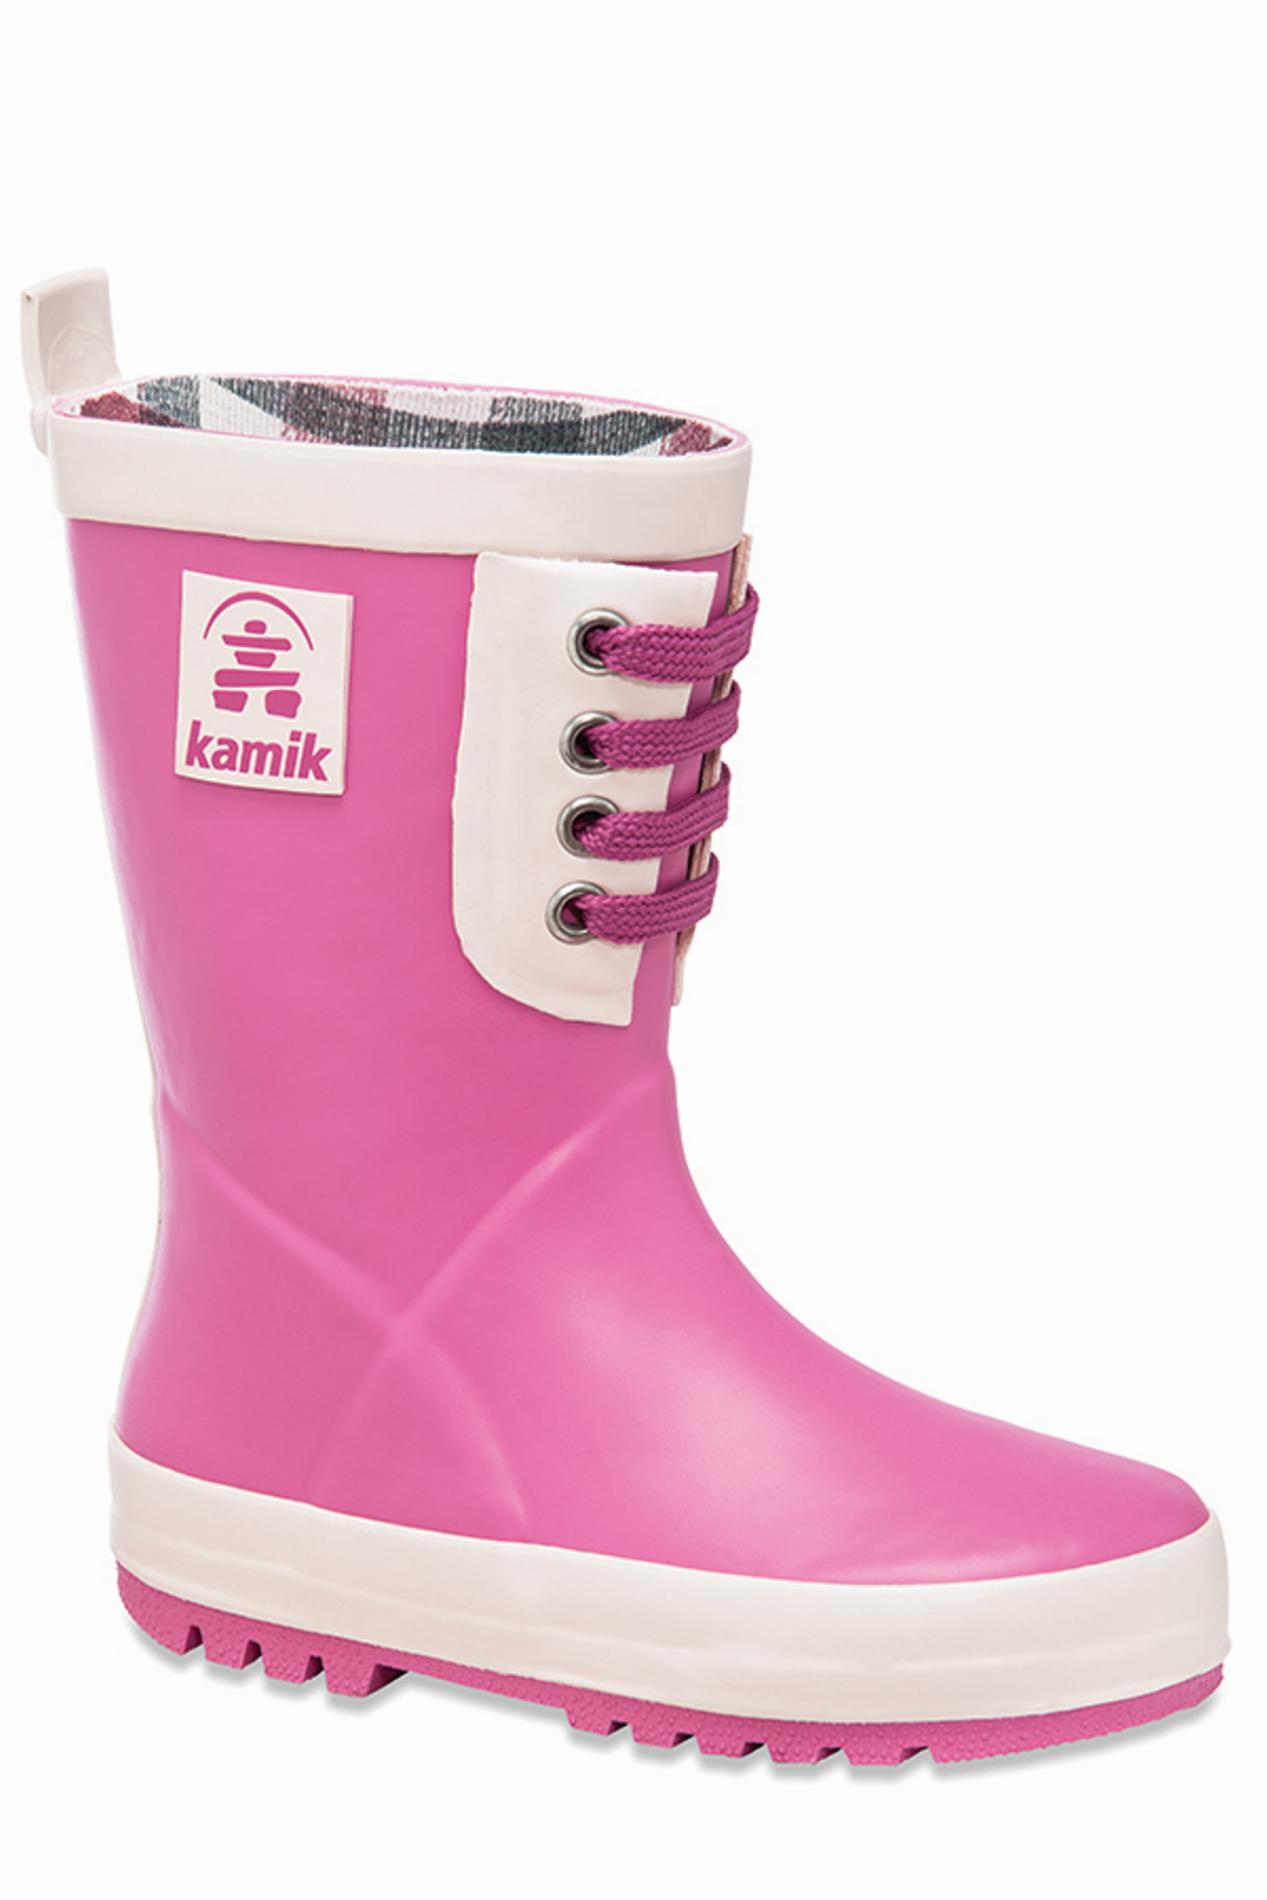 Kamik Toddler Girl's Rain Game Pink/White Rain Boot